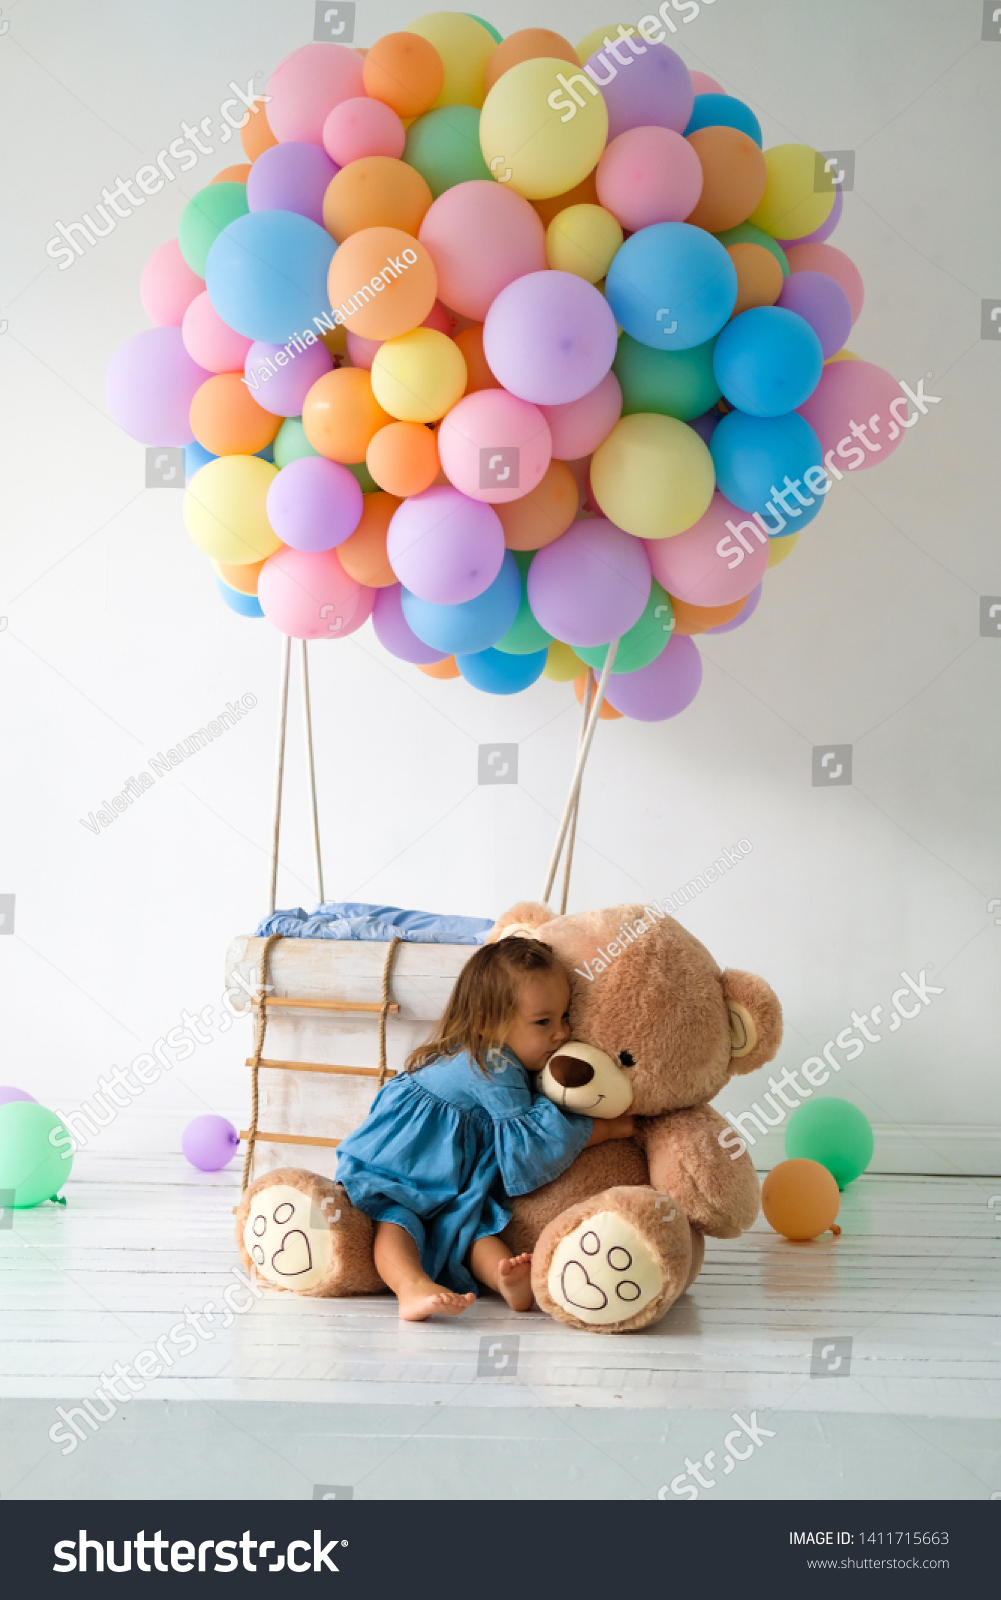 teddy bear for her birthday